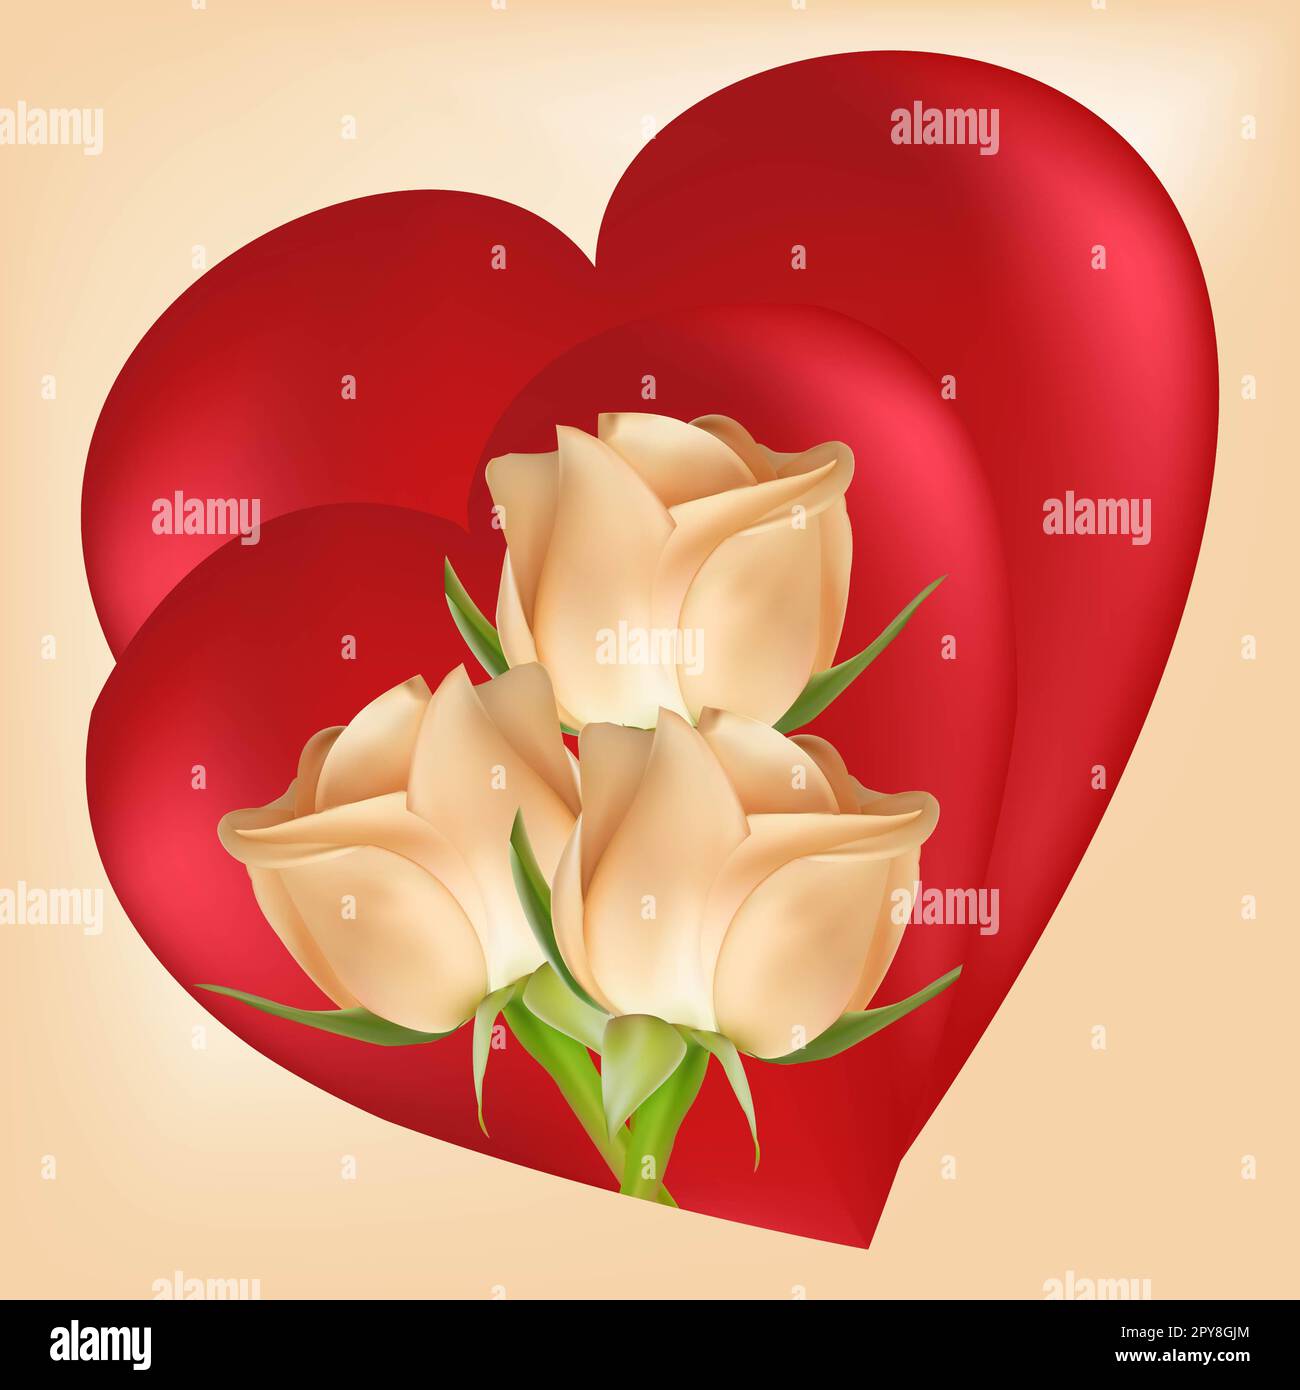 Lavanaya Silver Purple Gold Love Rose Flower with Beautiful Gift Box